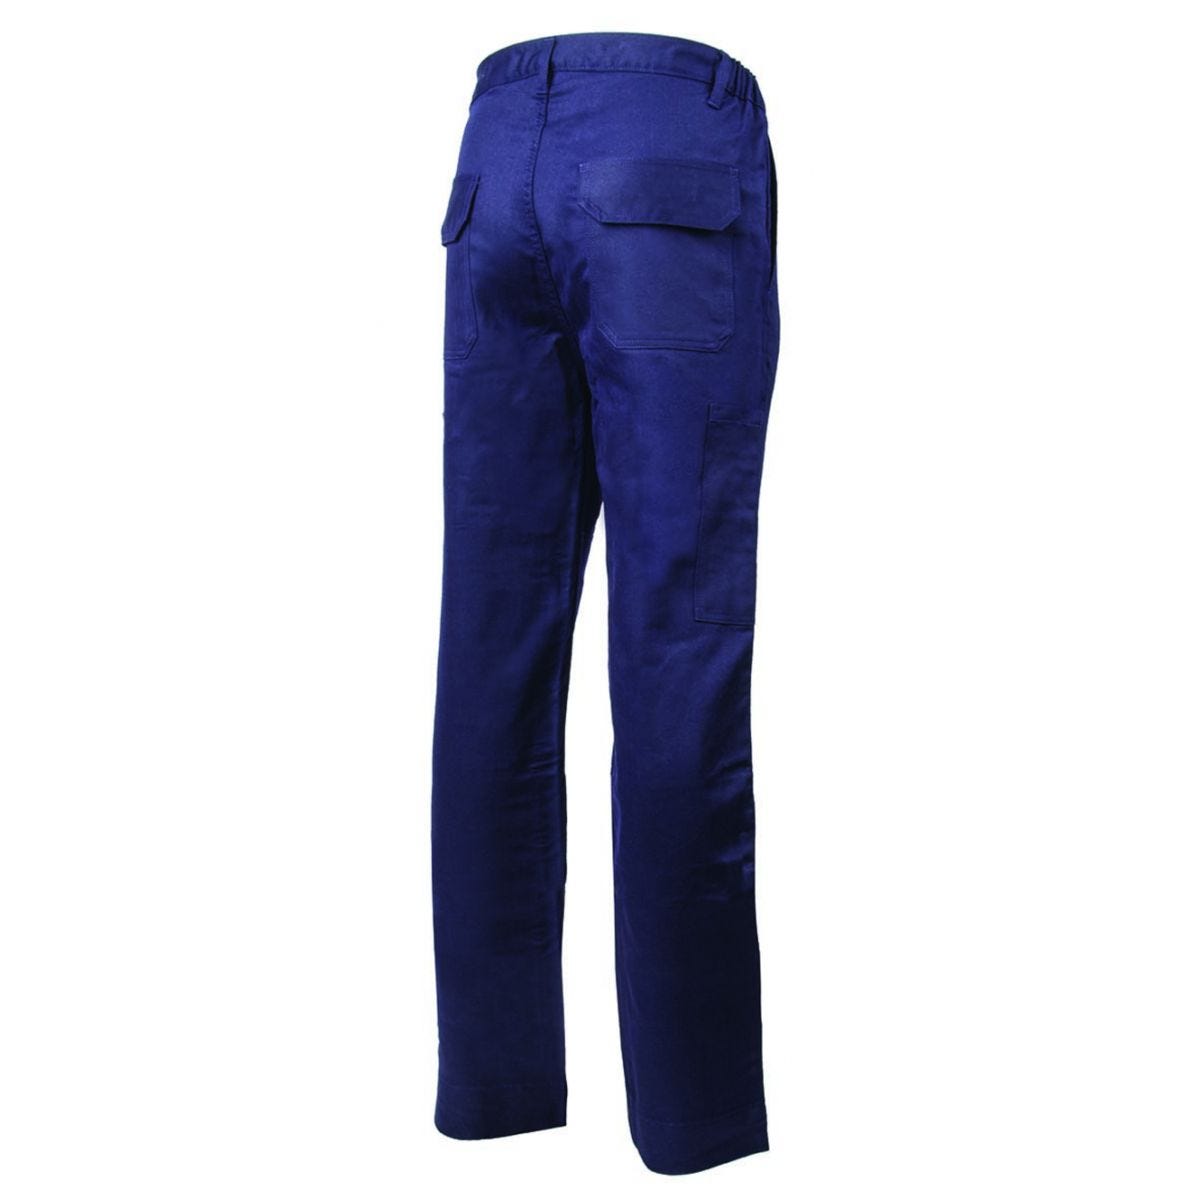 Pantalon STELLER multirisques - COVERGUARD - Taille M 1